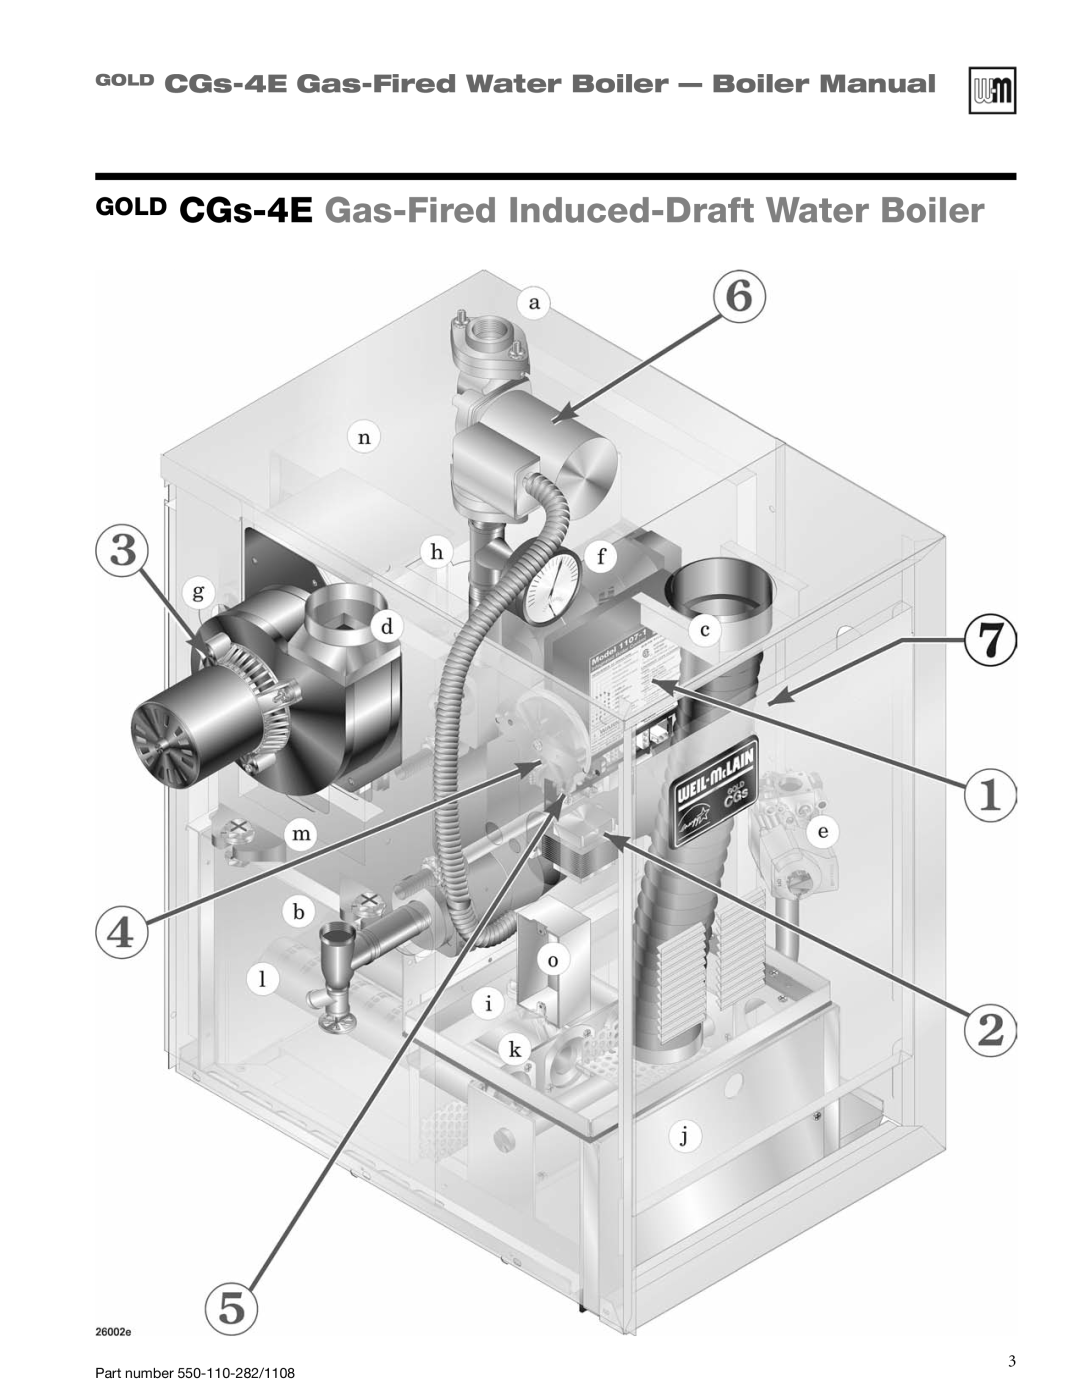 Weil-McLain CGS-4E GOLD CGs-4E Gas-Fired Induced-DraftWater Boiler, GOLD CGs-4E Gas-FiredWater Boiler - Boiler Manual 